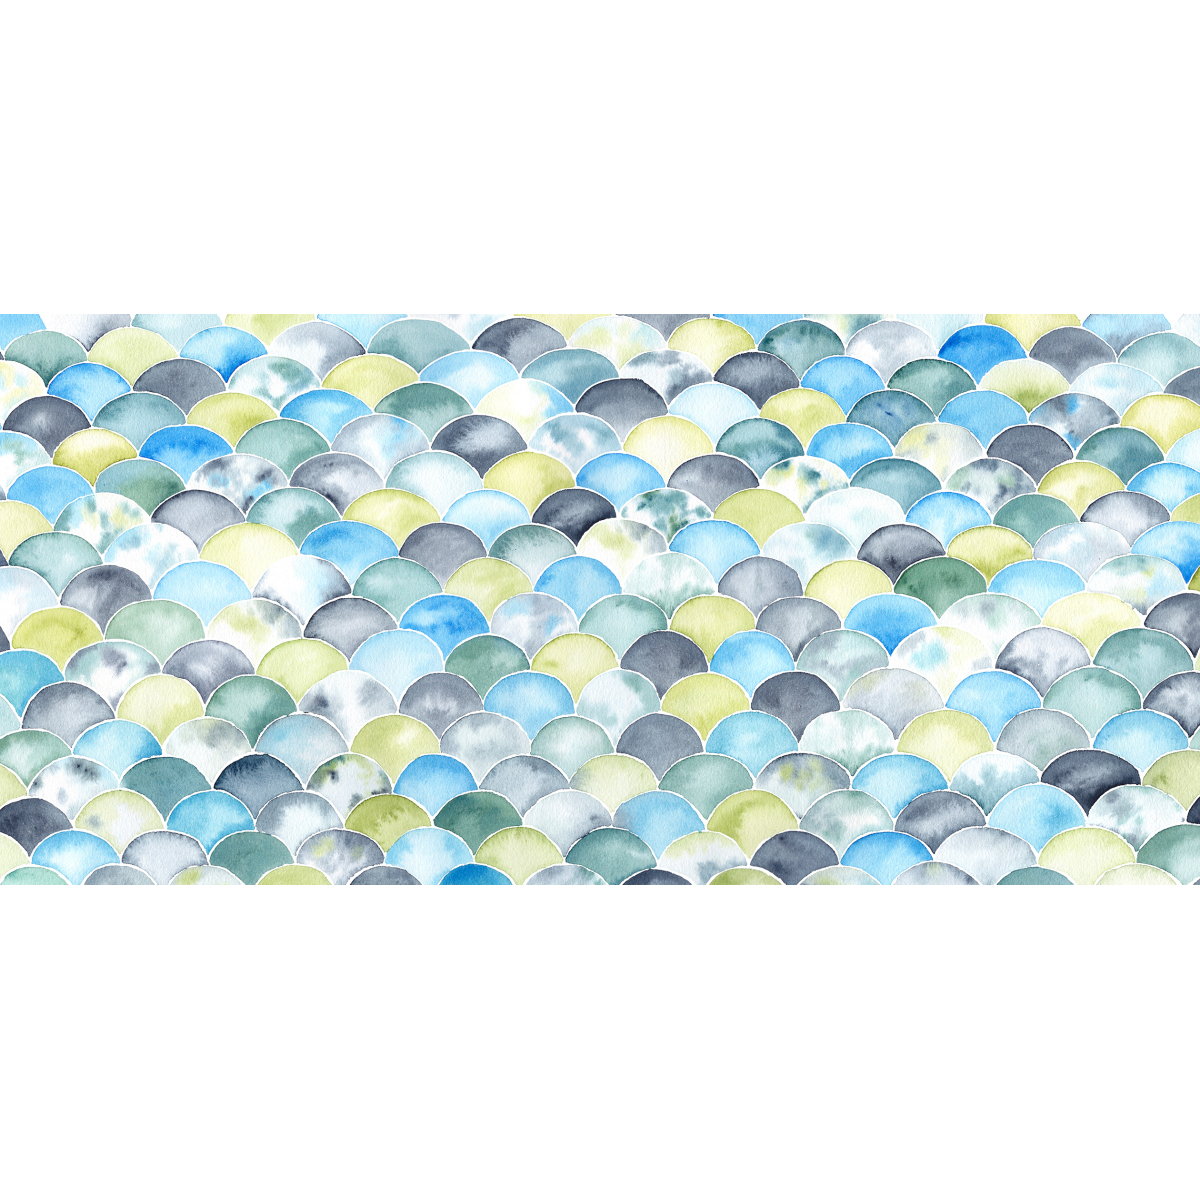 Panoramic wallpaper Scales - Collection Noëmie Krey - Acte-Deco